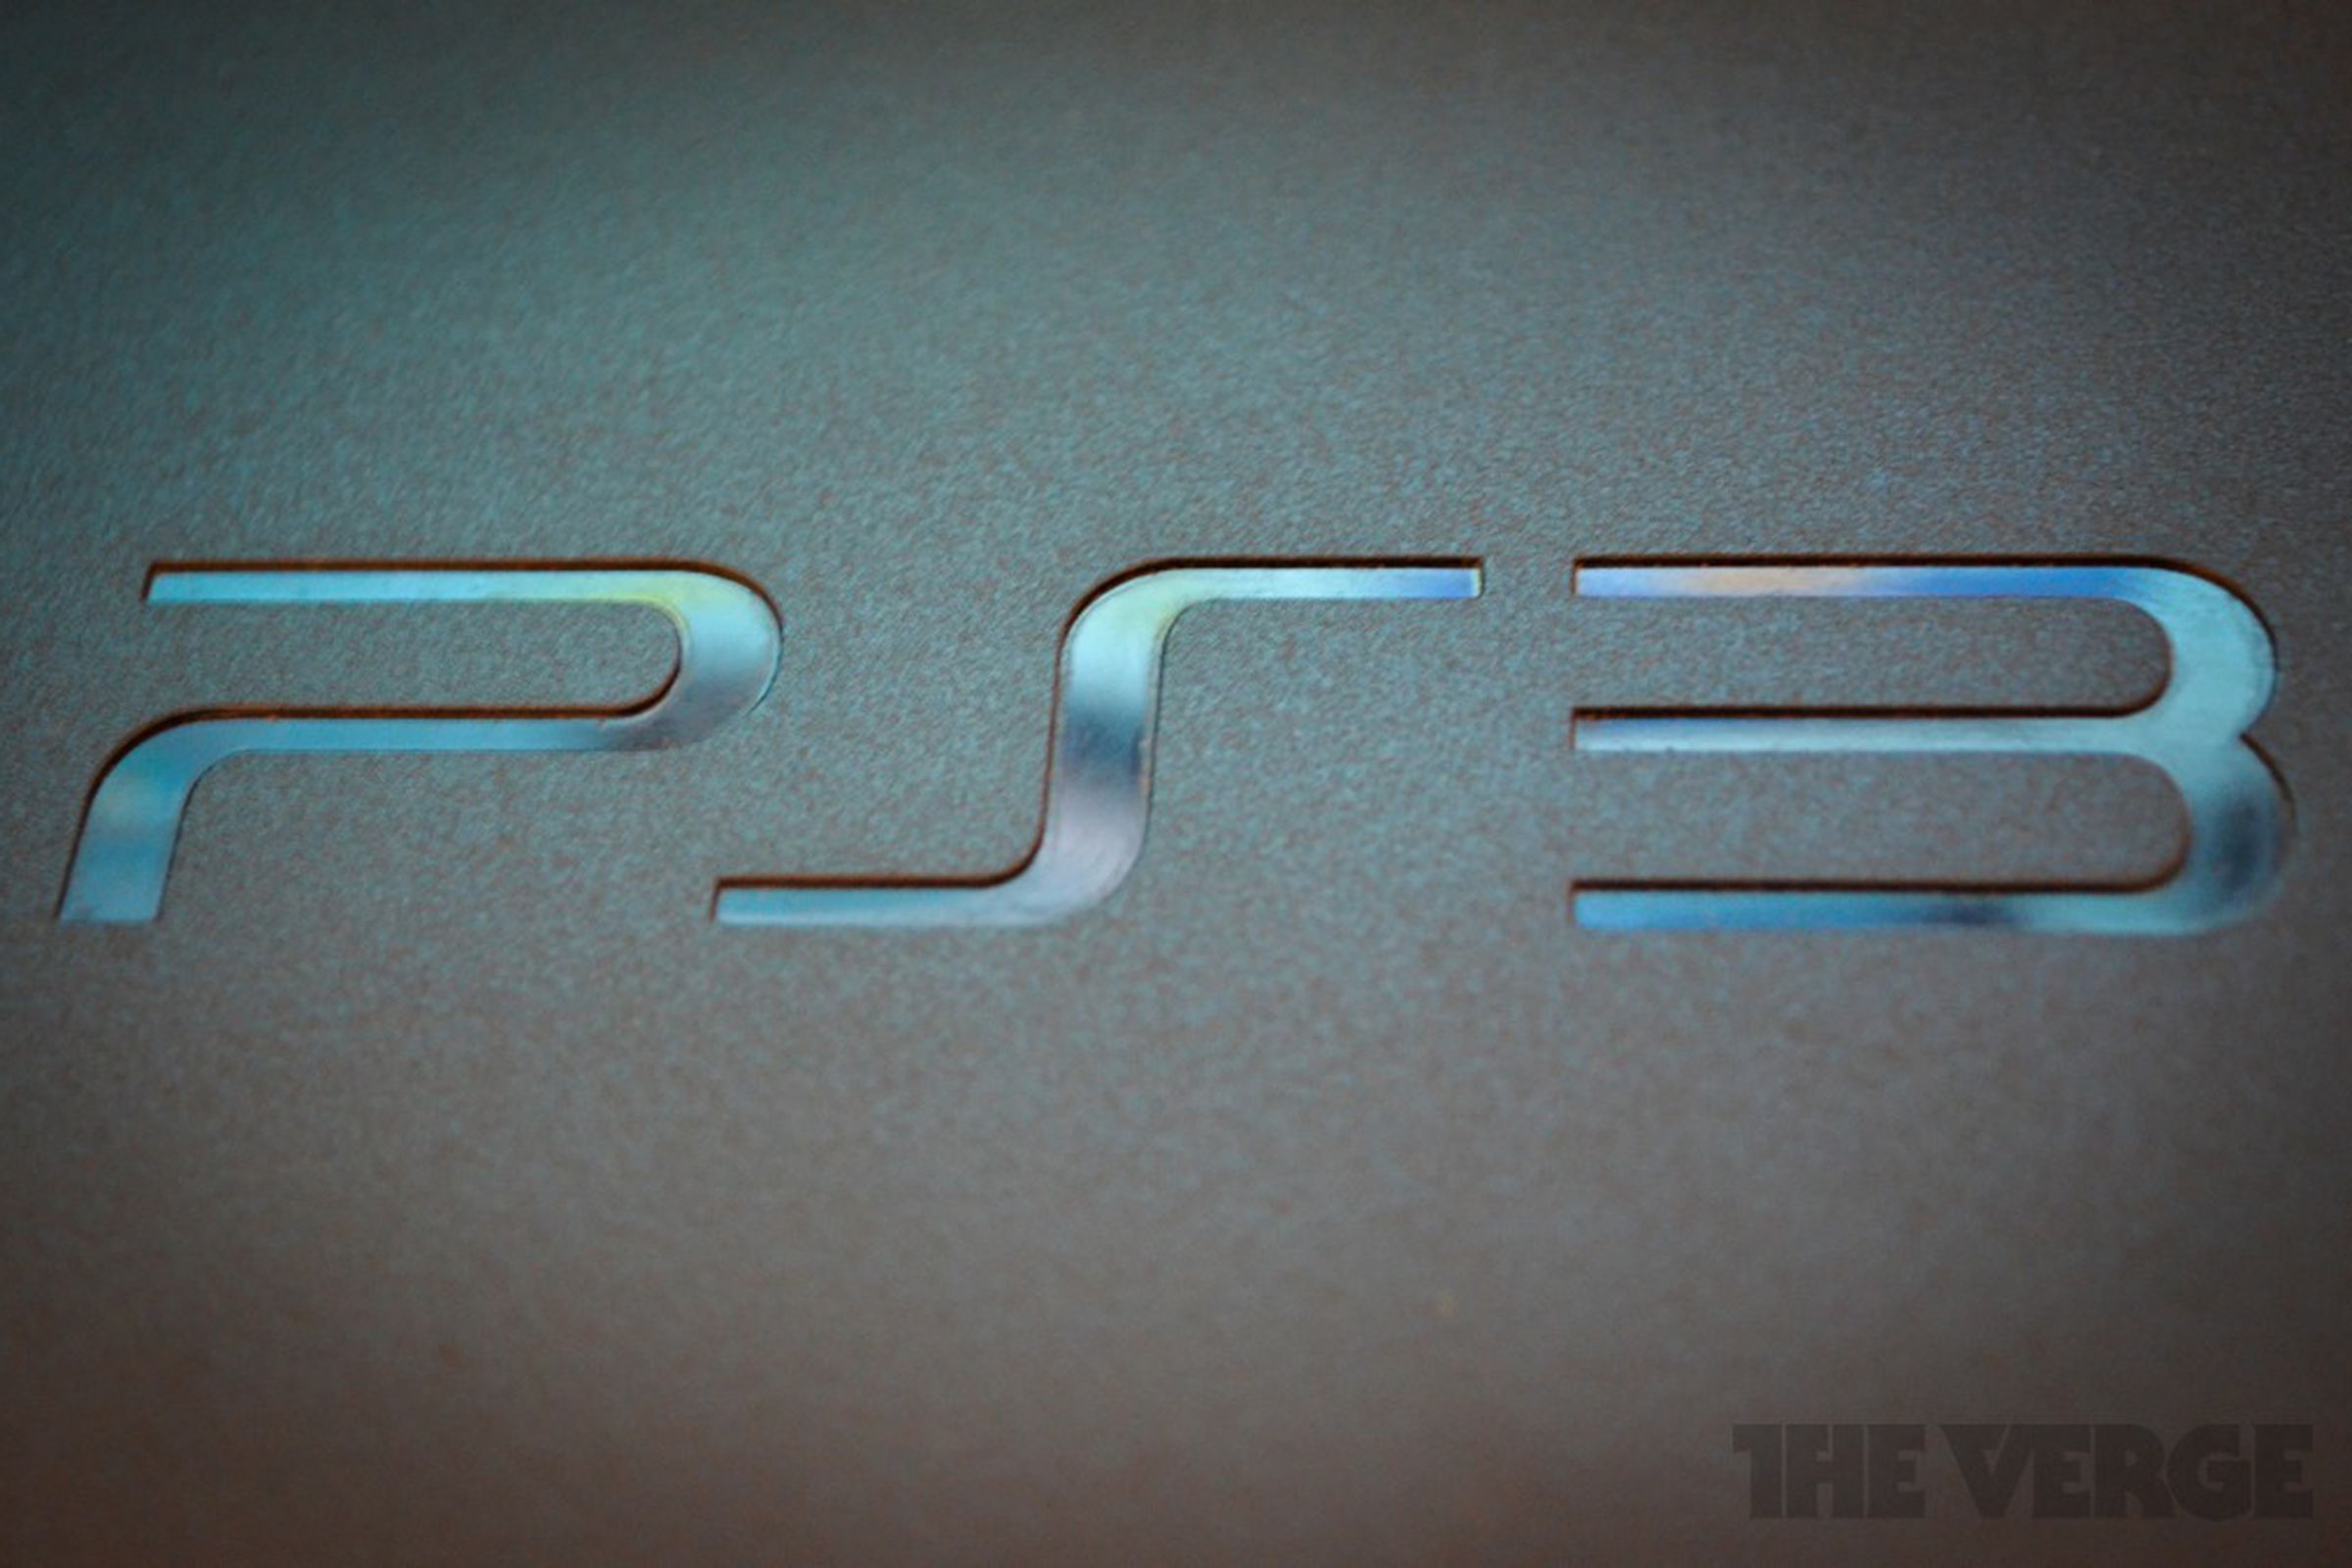 PS3 slim logo